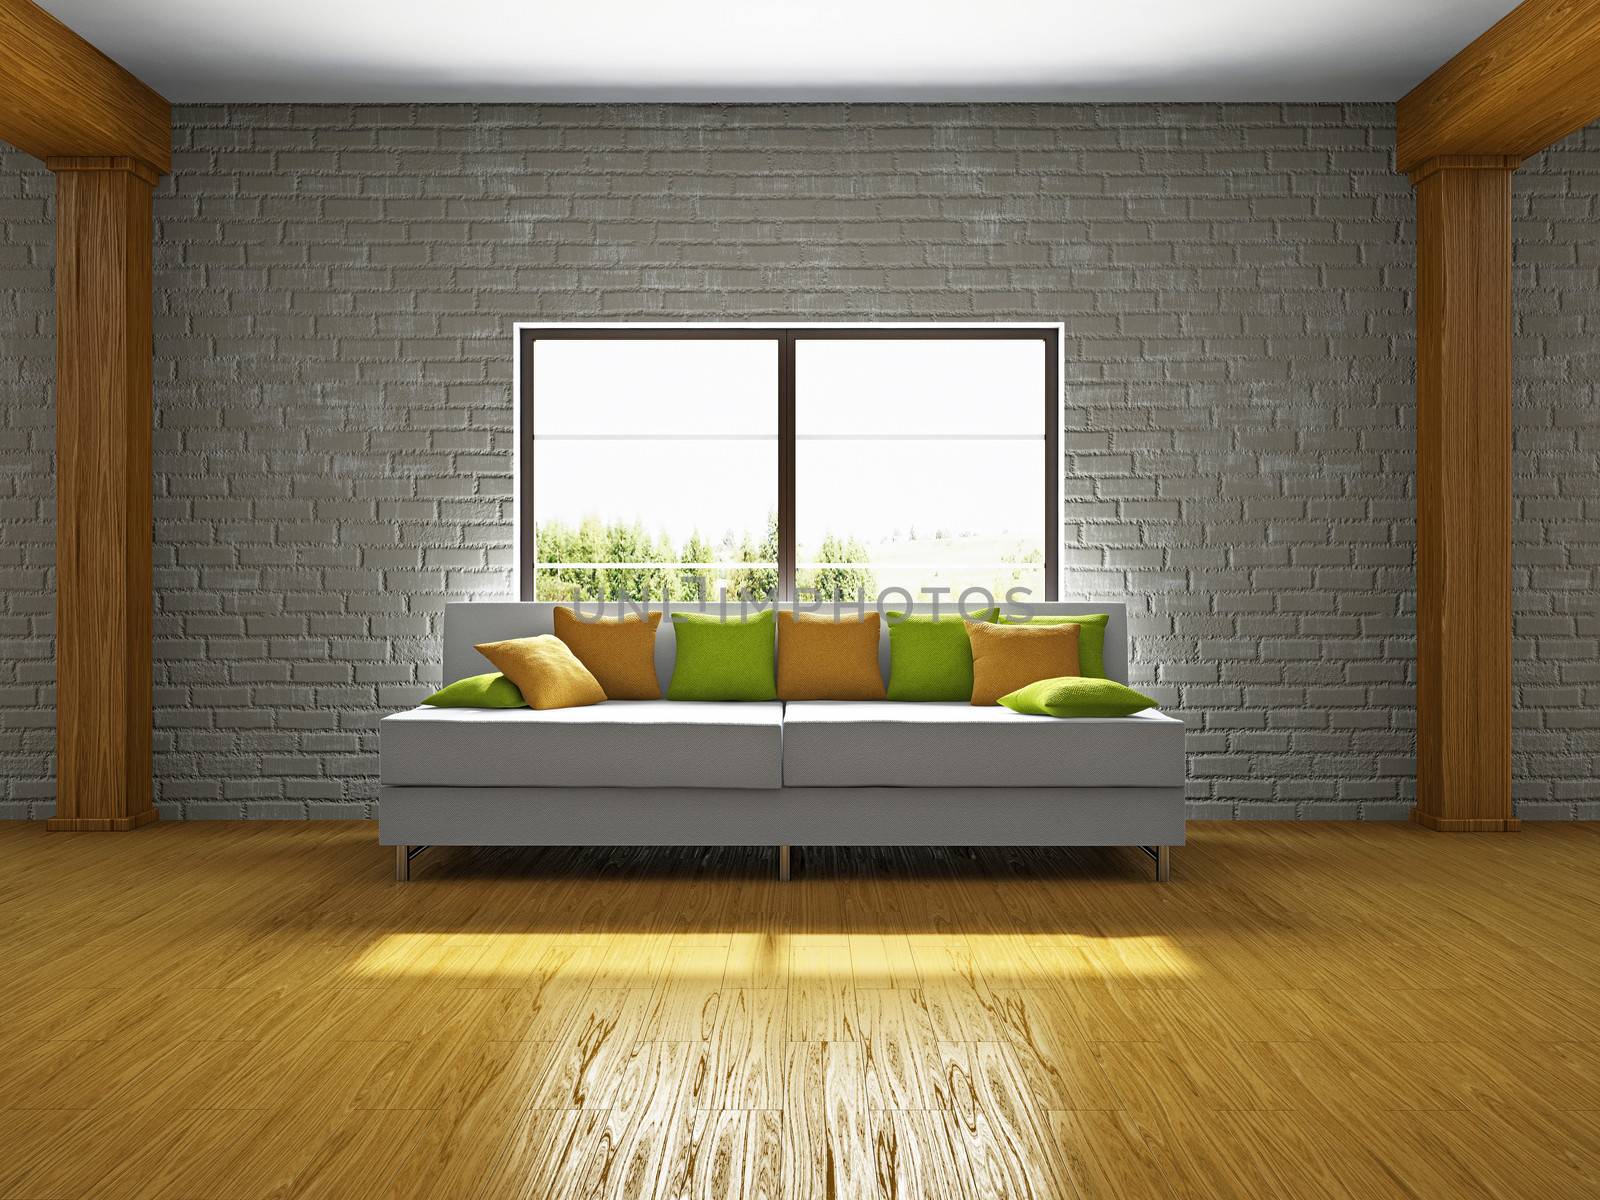 Livingroom with sofa near the window